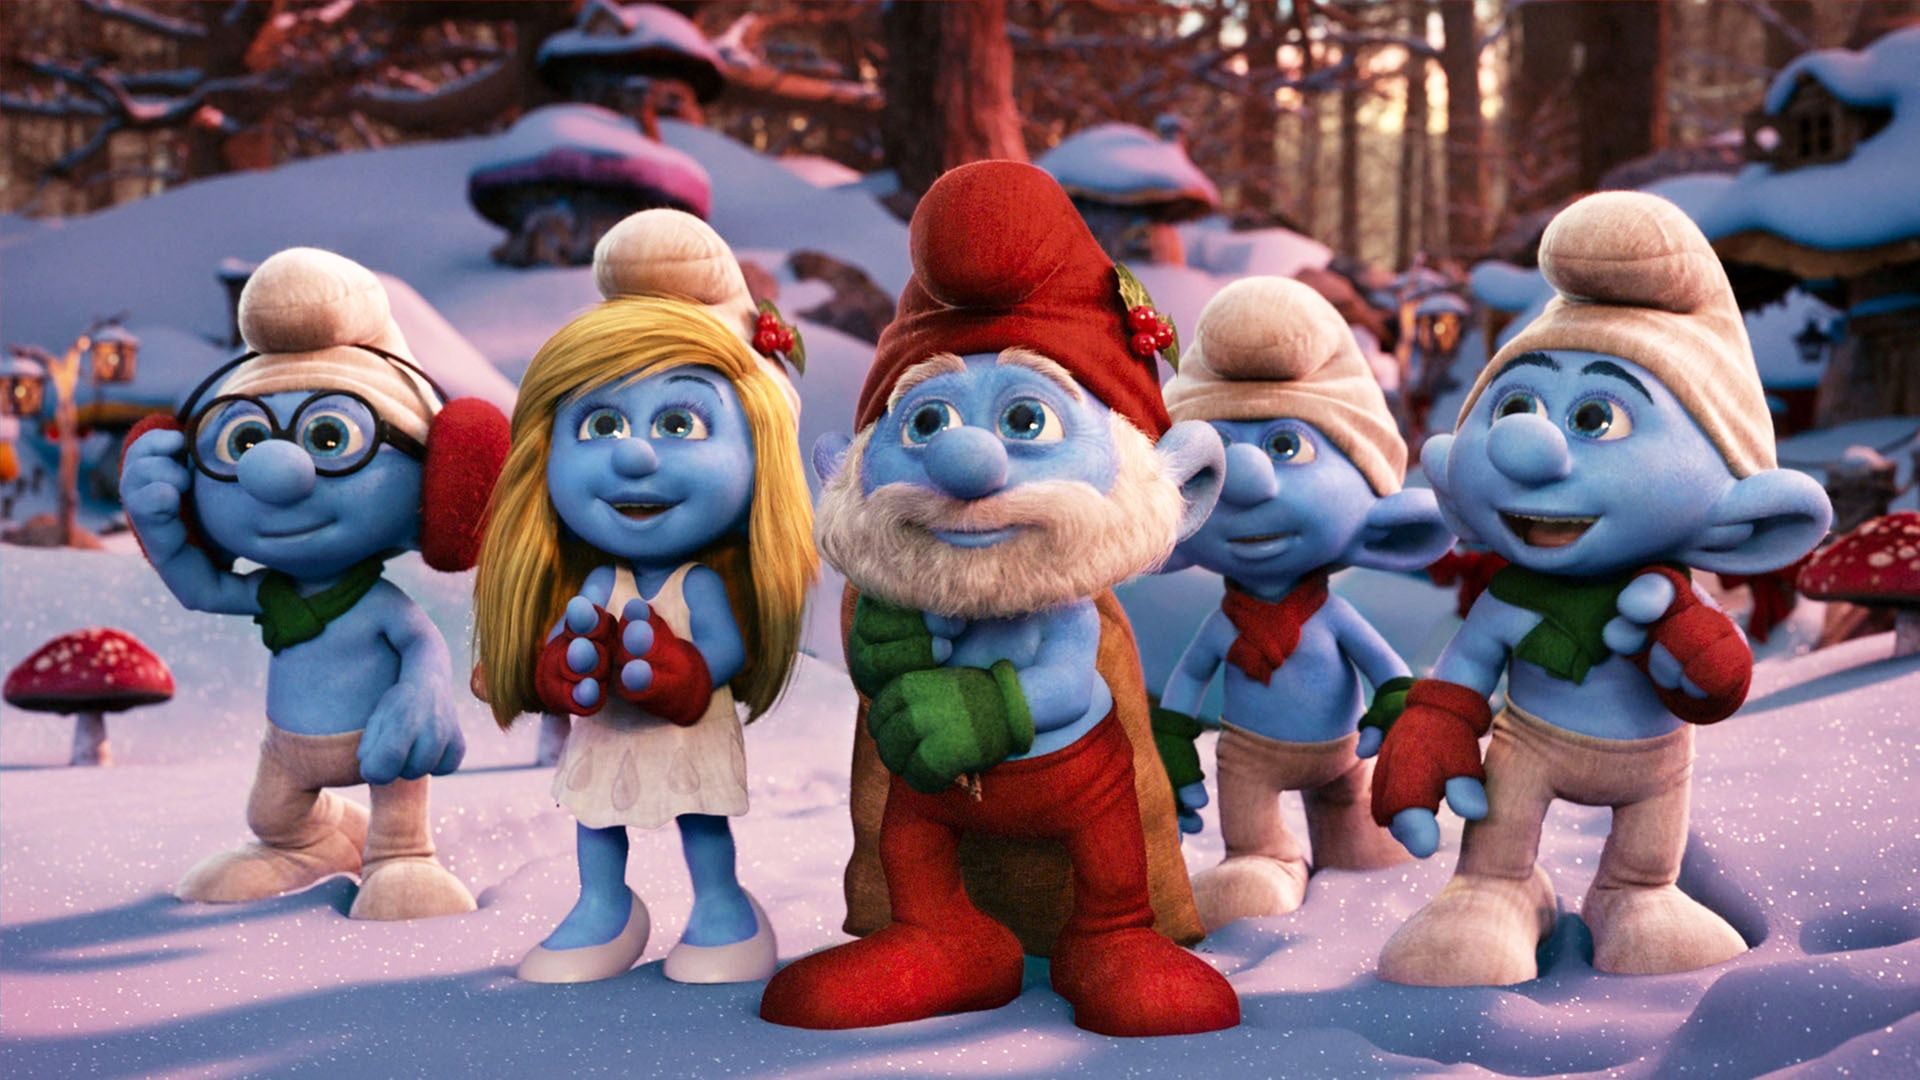 The Smurfs: A Christmas Carol Backdrop